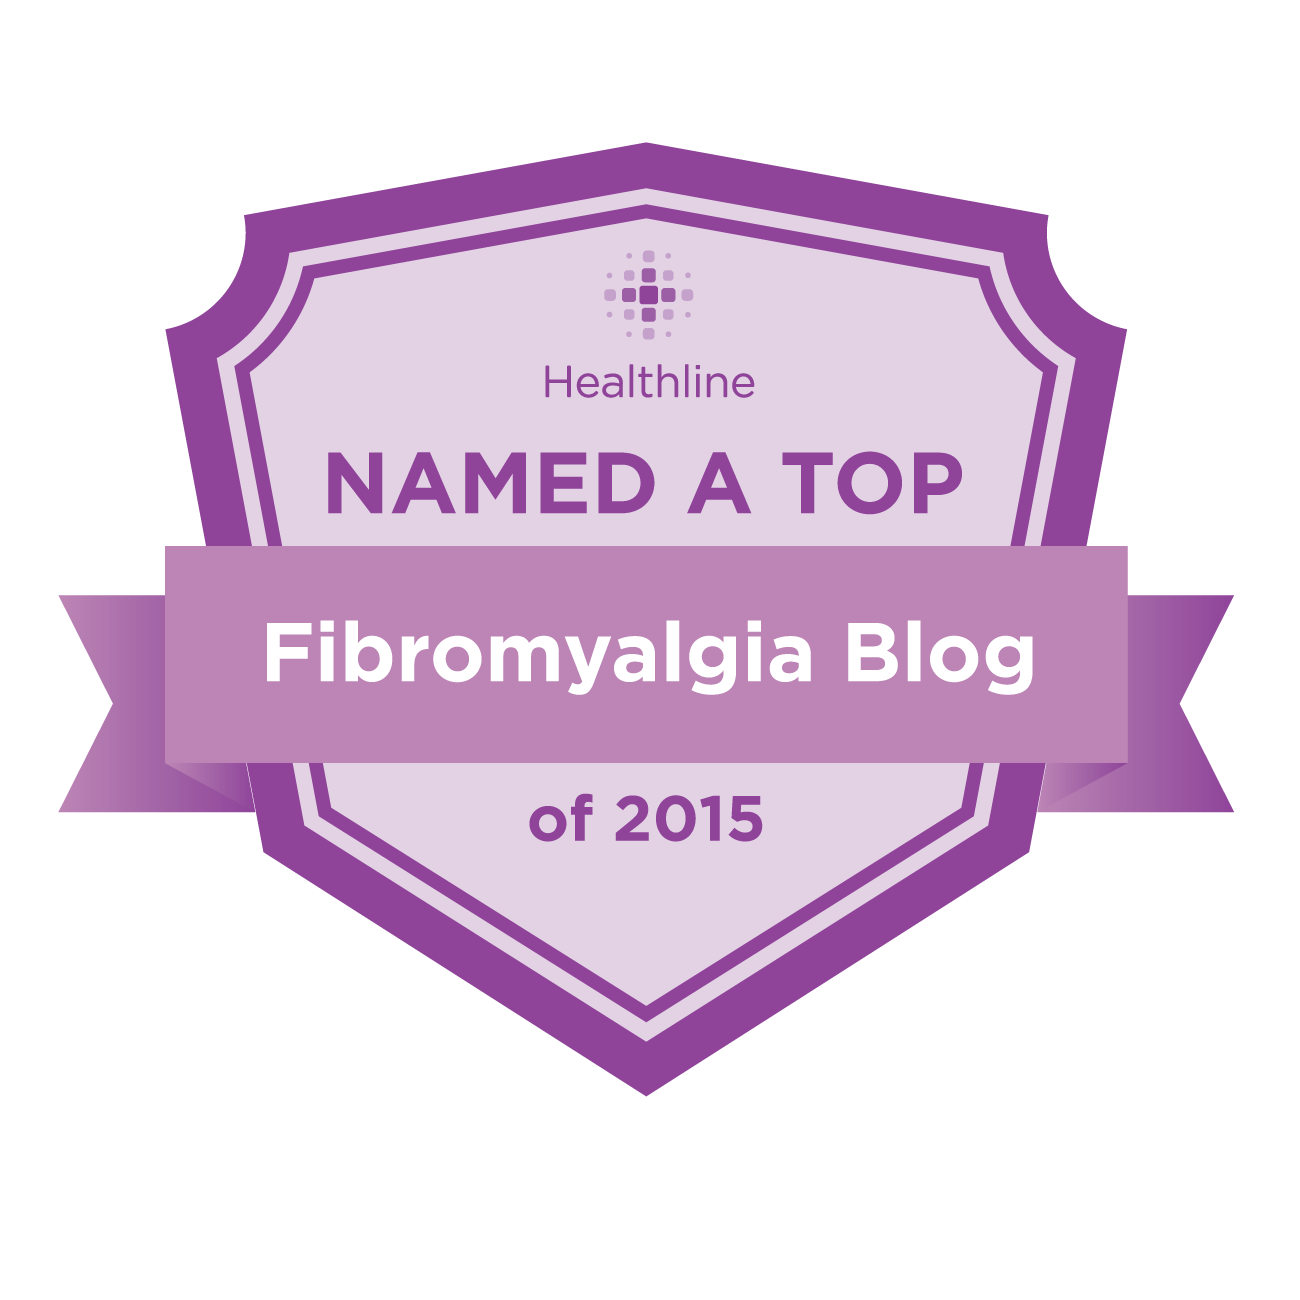 fibromyalgia best blogs badge